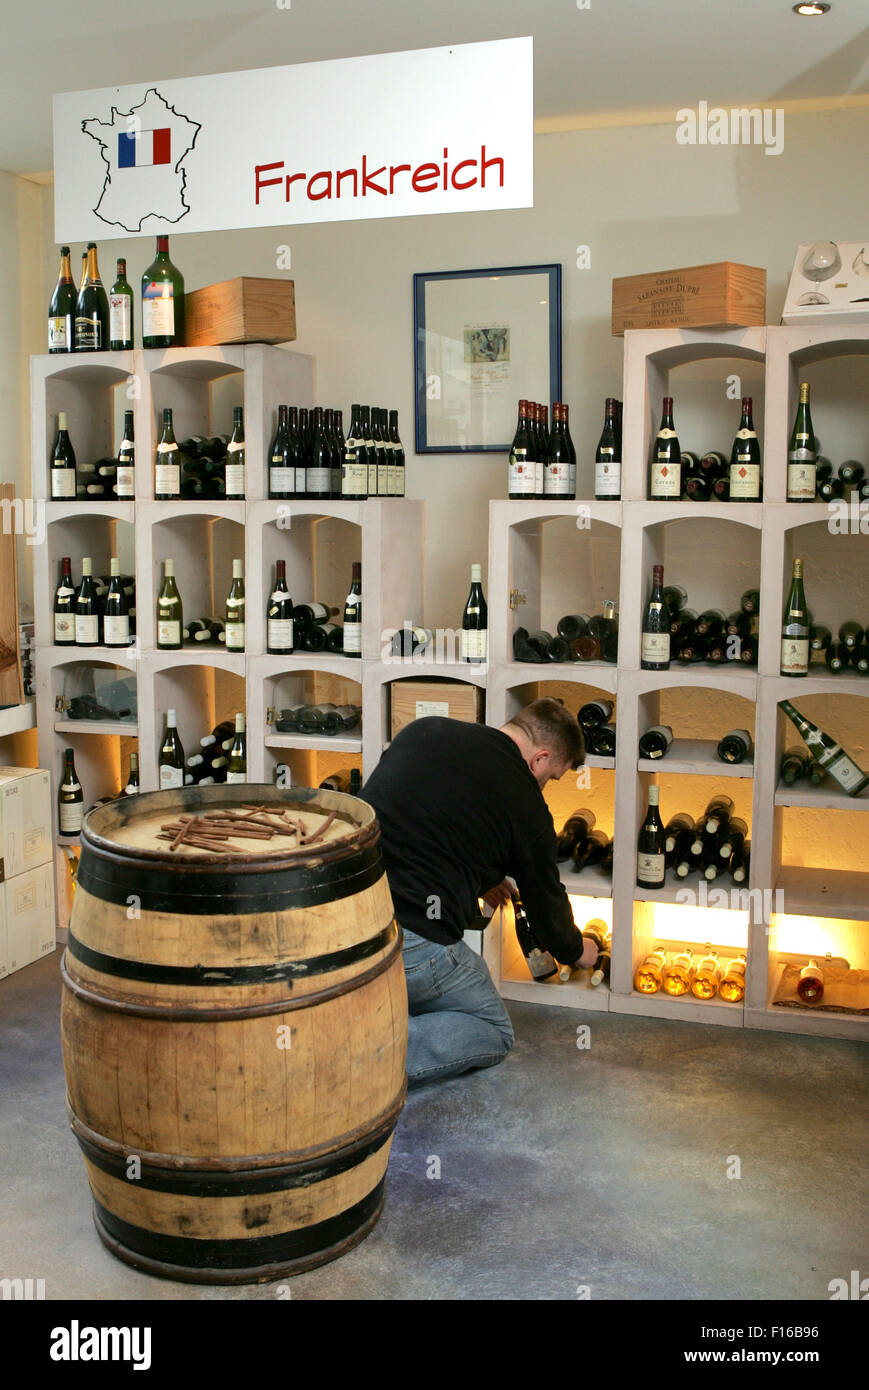 Wine bottles Stock Photo